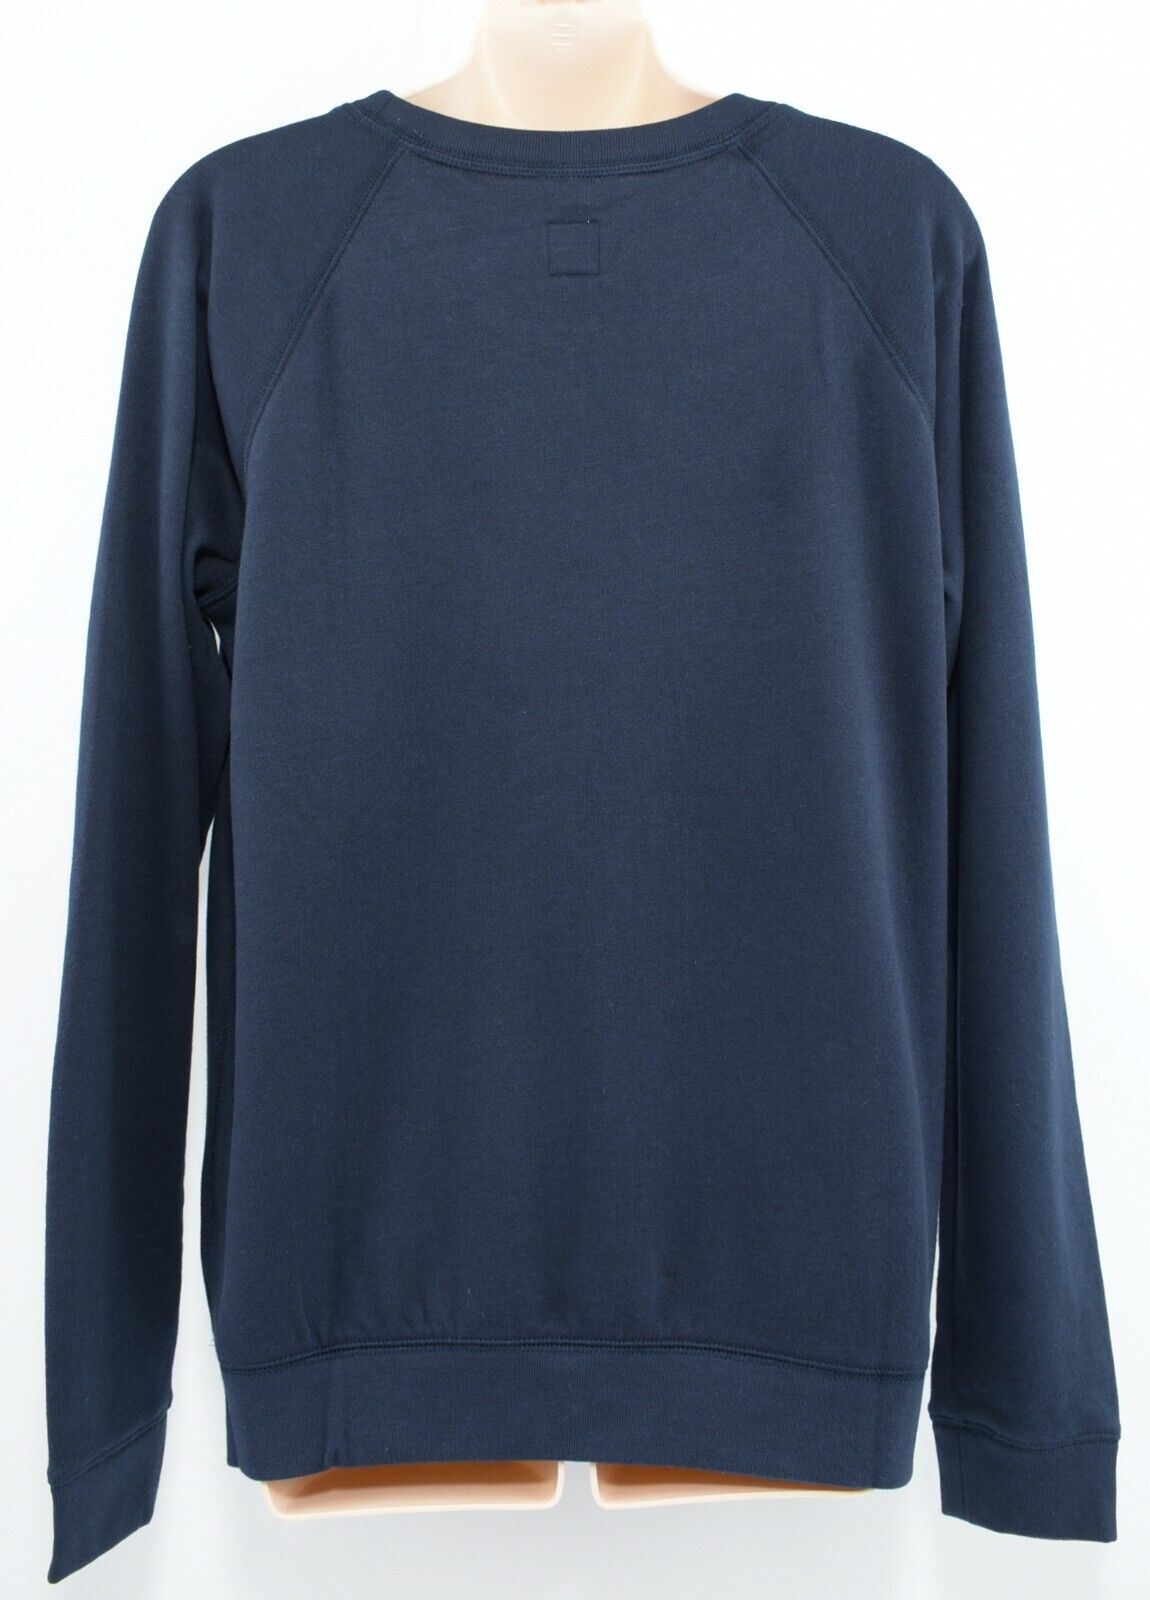 JACK WILLS Womens COLBY Sweatshirt, Navy Blue, size L / UK 14